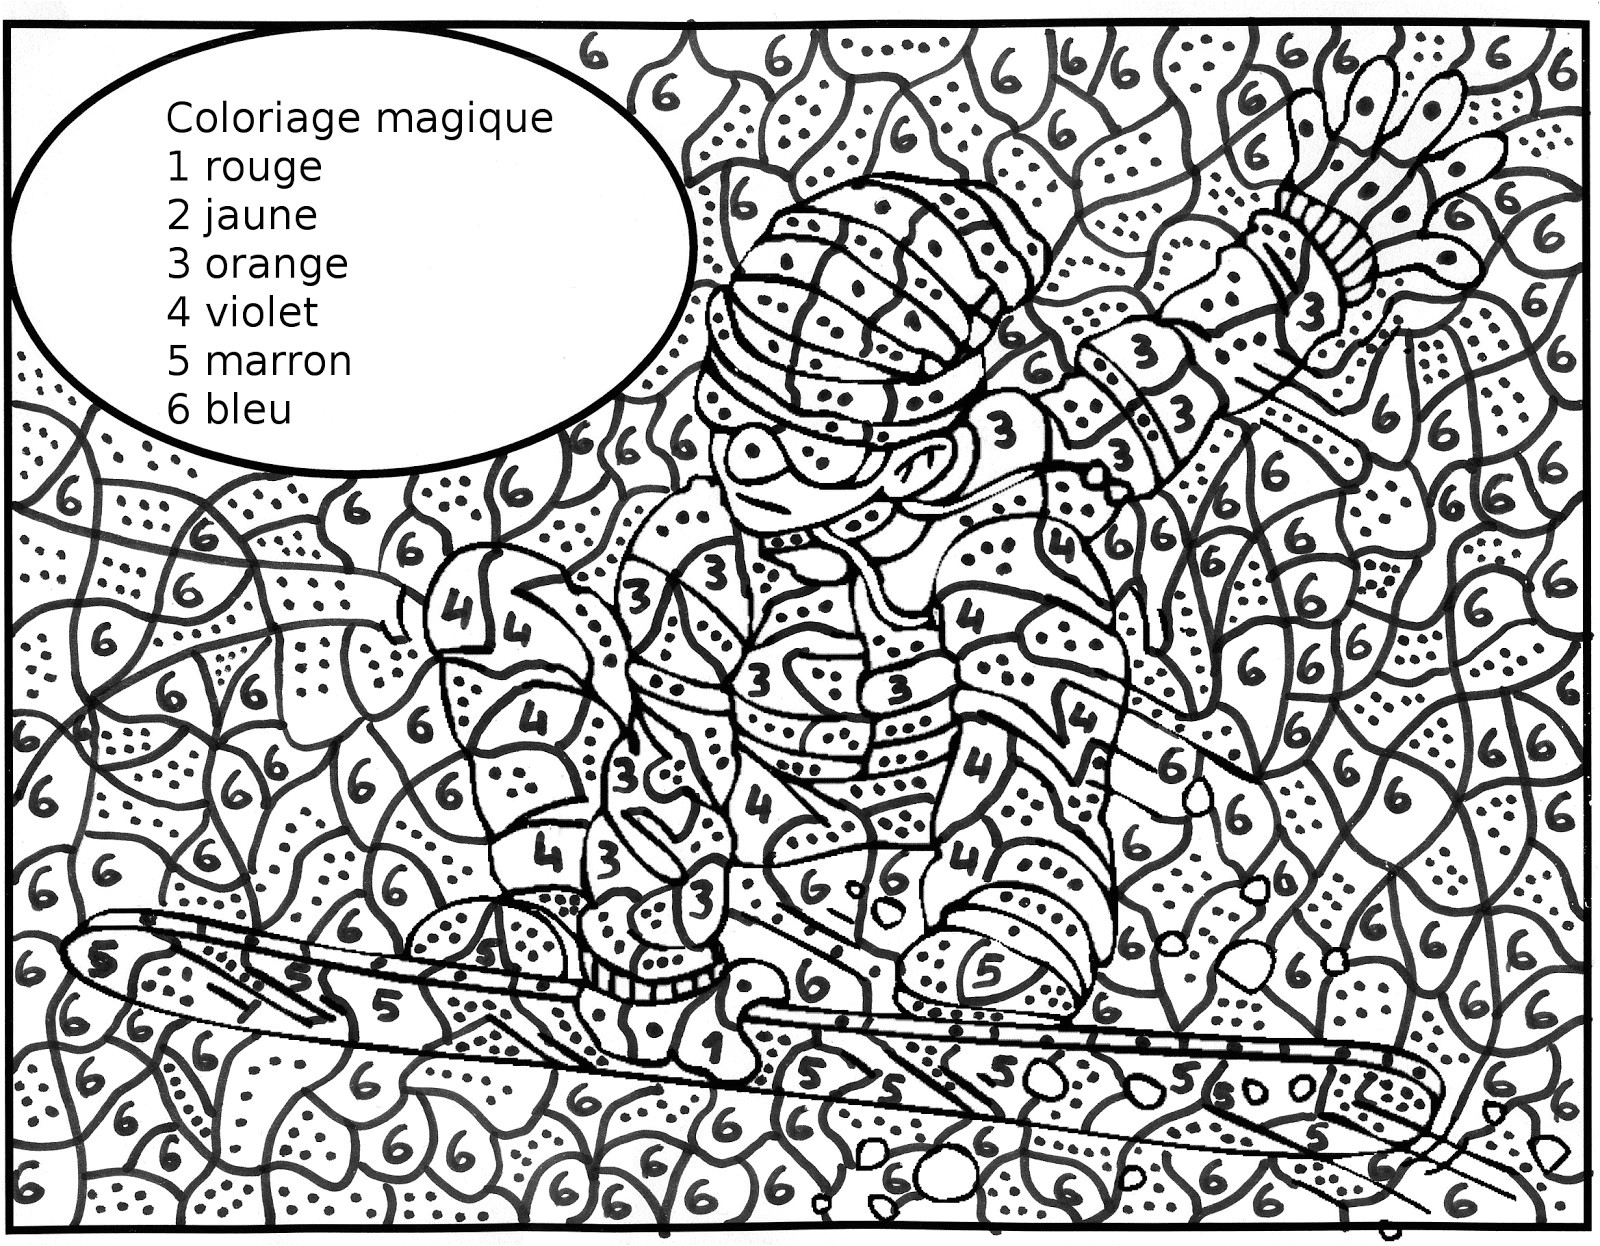 Coloriage Magique Spiderman Imprimer Coloriage Magique A Imprimer Coloriage Magique 2336 ...